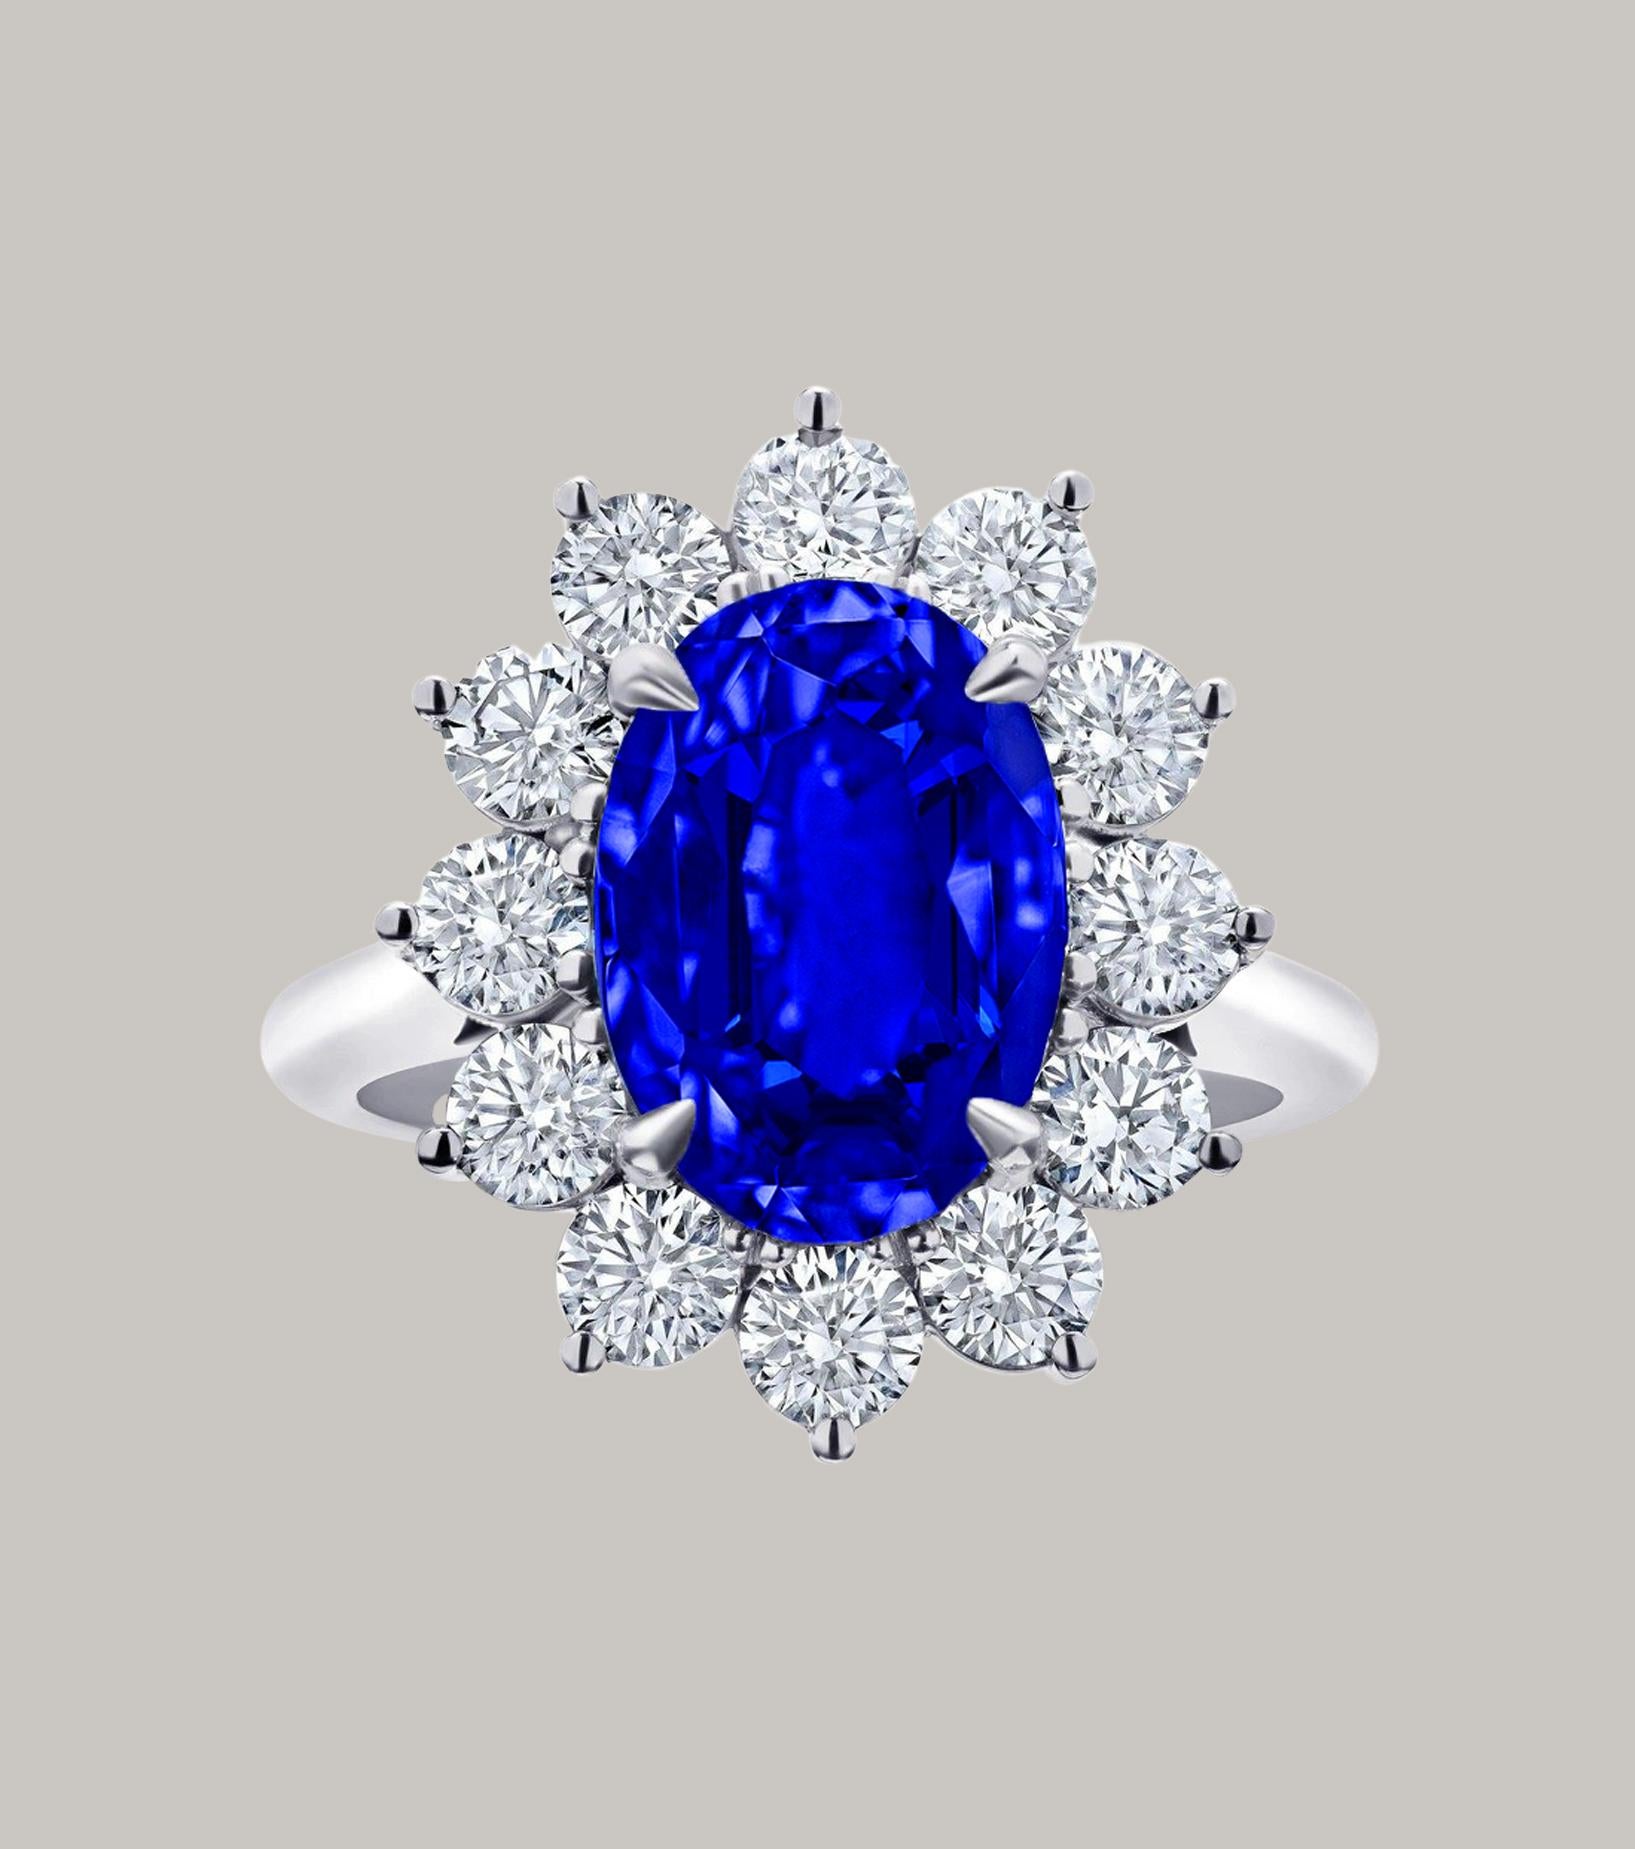 4ct blue sapphire